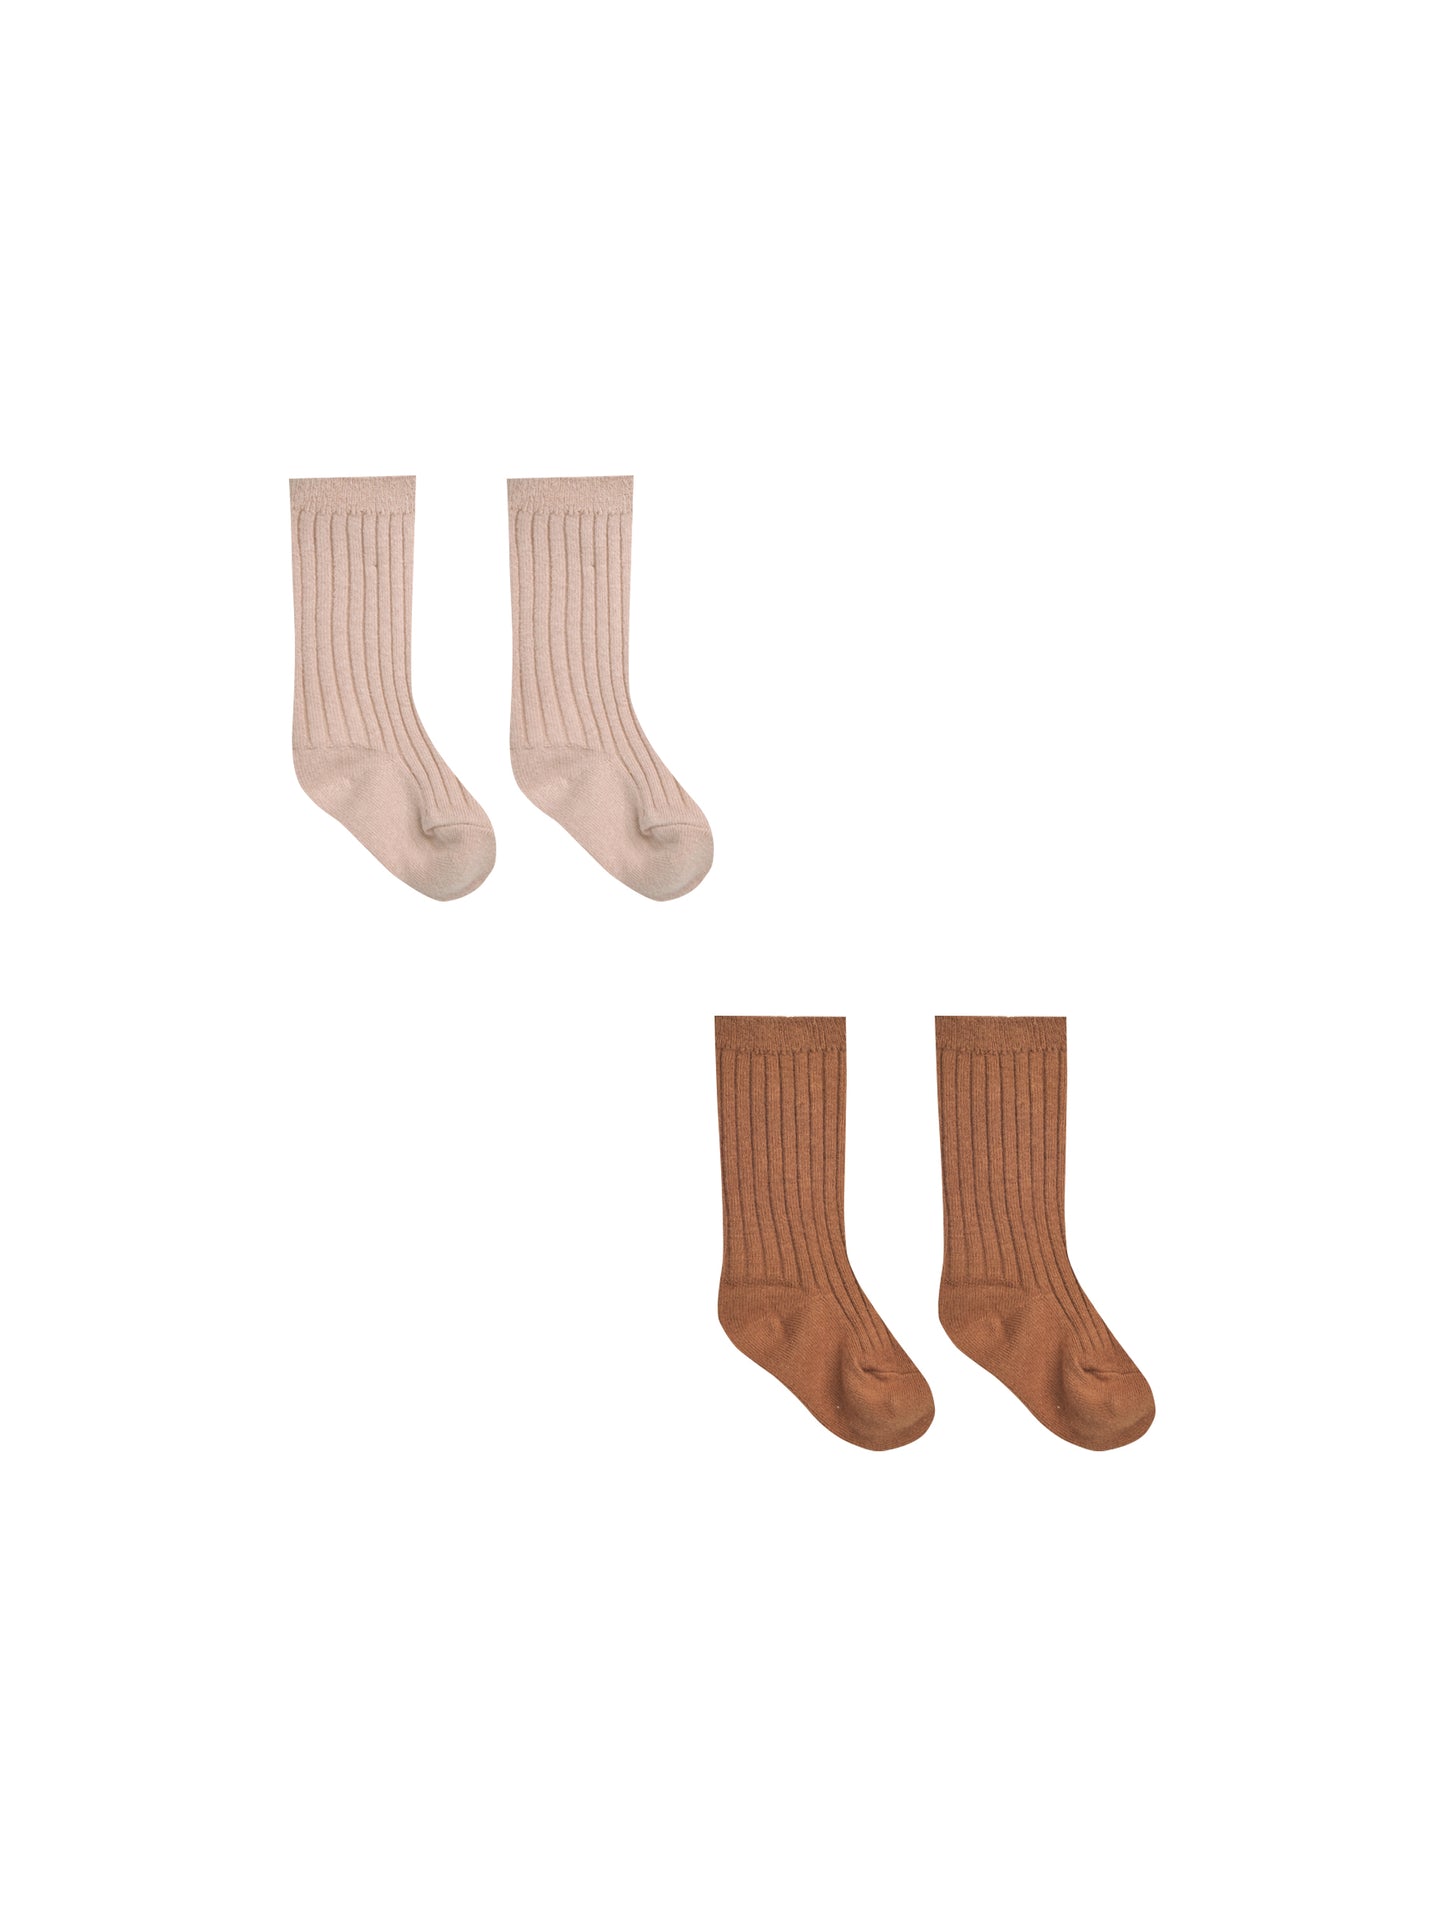 Quincy Mae - Socks Set - Blush, Clay